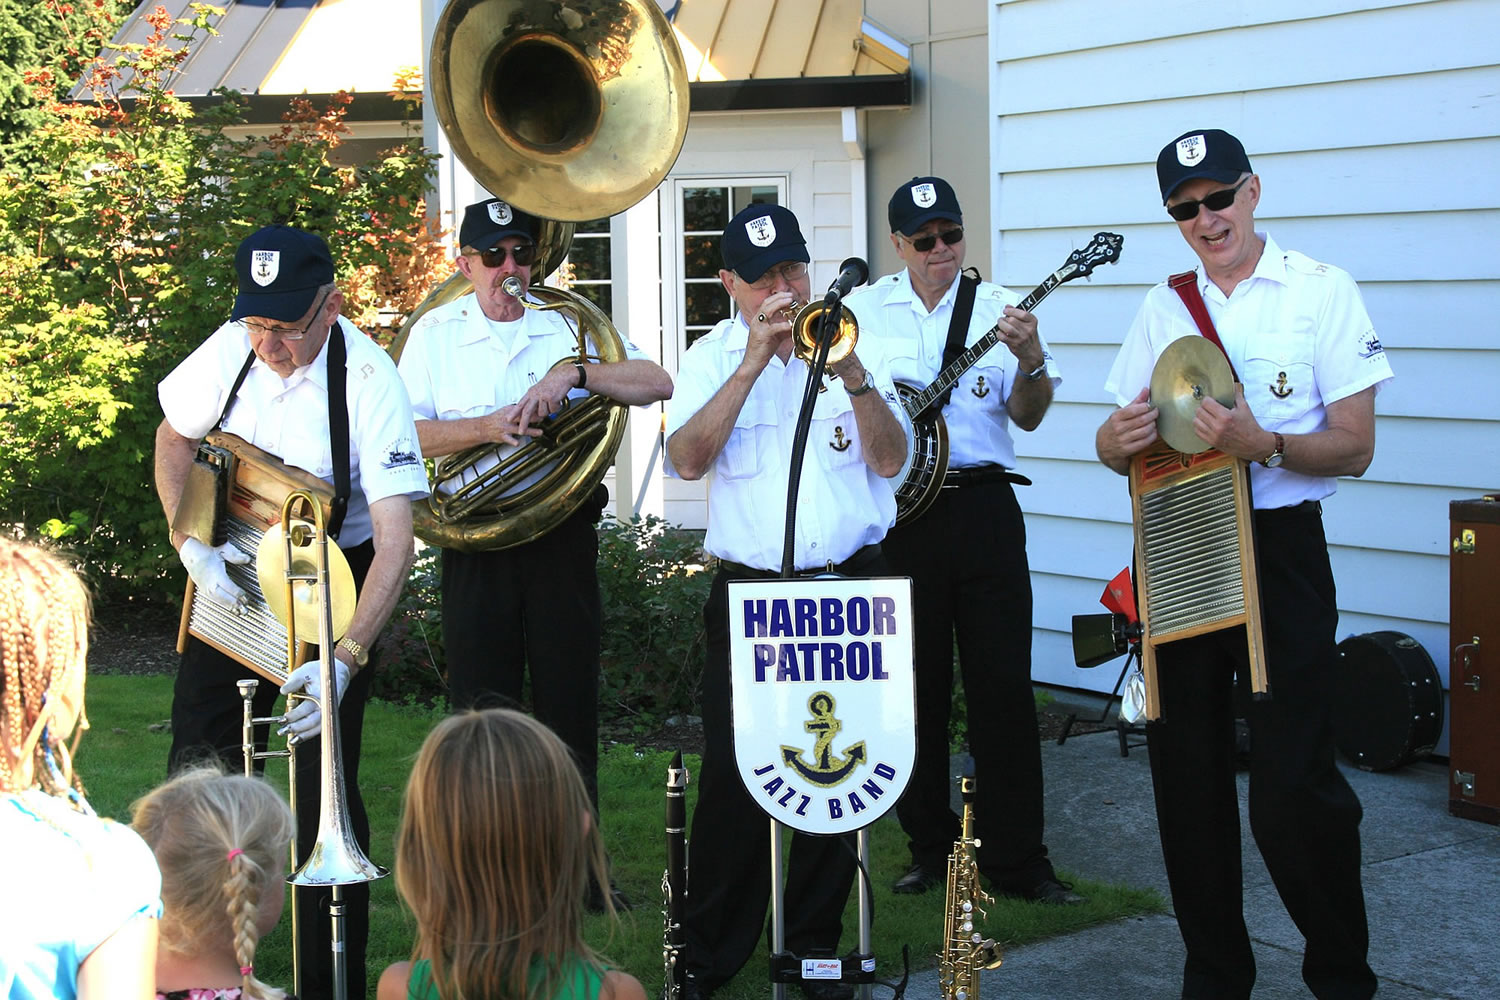 The Harbor Patrol Jazz Band features Bob Turbush, from left, Bill Stauffer, John Reitz, Dave Johnson and former member Rick Camebell.